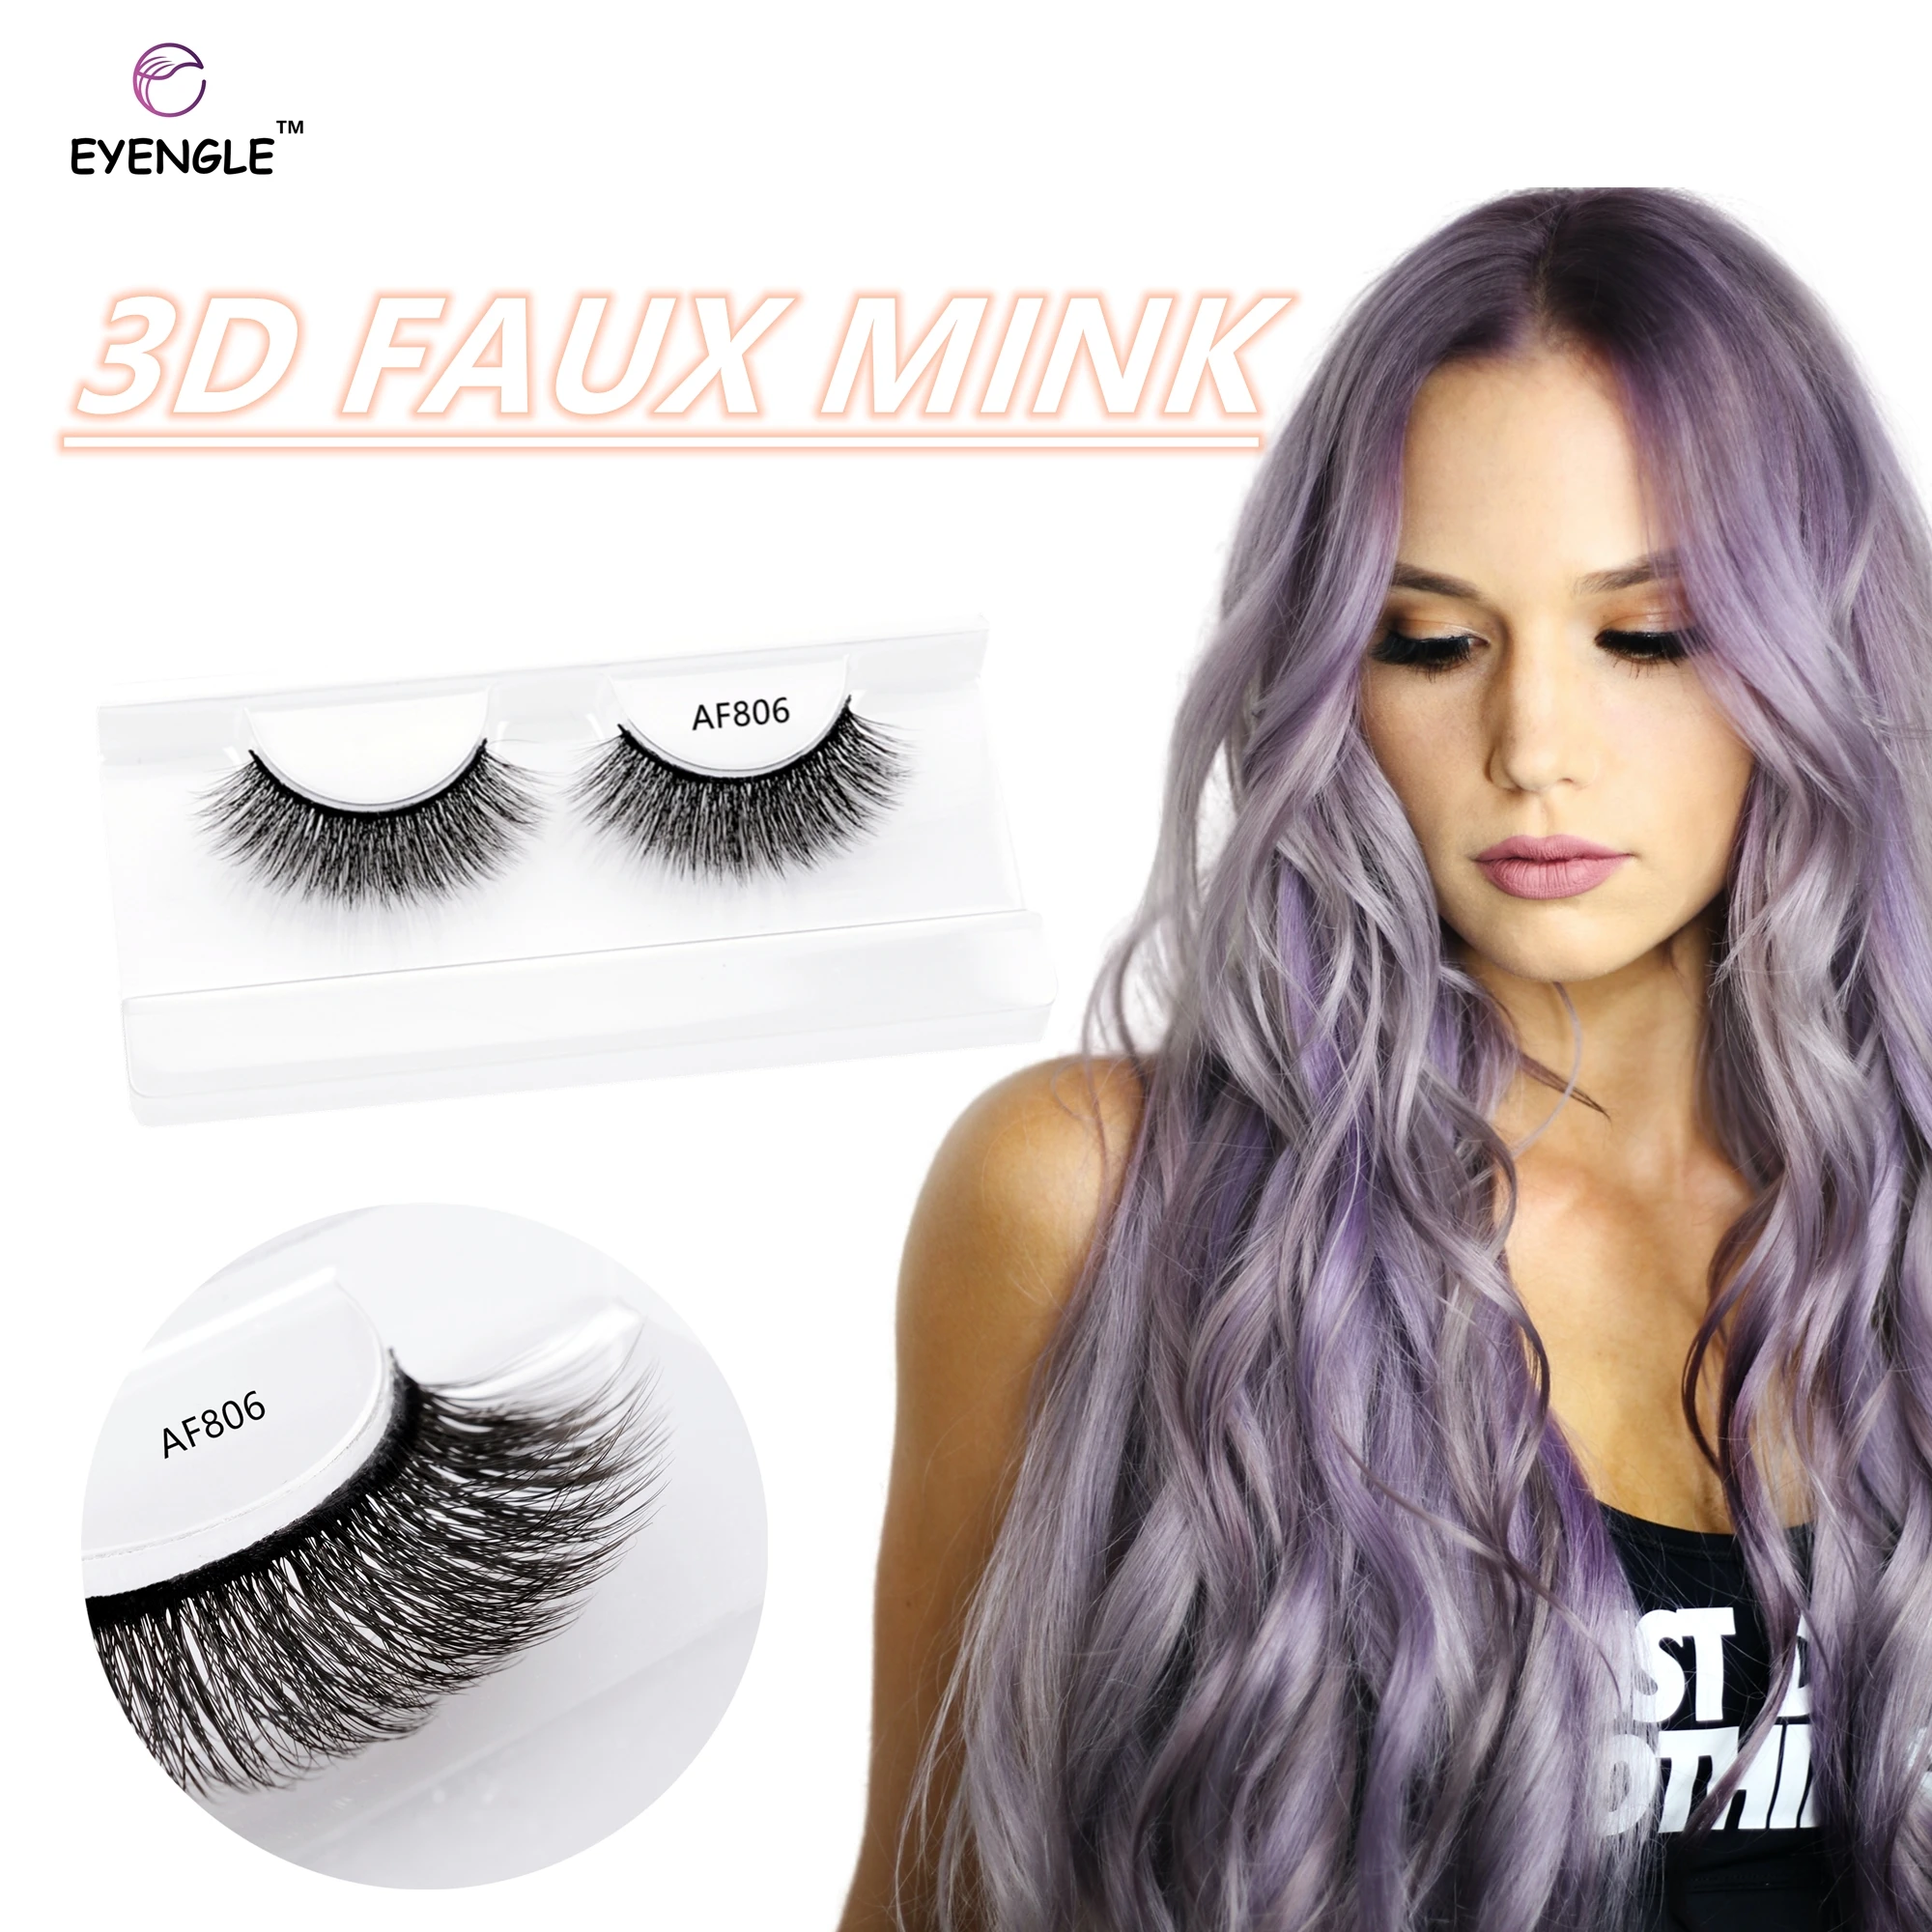 

EYENGLE 3D False Eyelashes Natural Thick Long Soft Handmade 10-15mm Faux Mink Eyes Lashes Extension Reusable Makeup 11.11